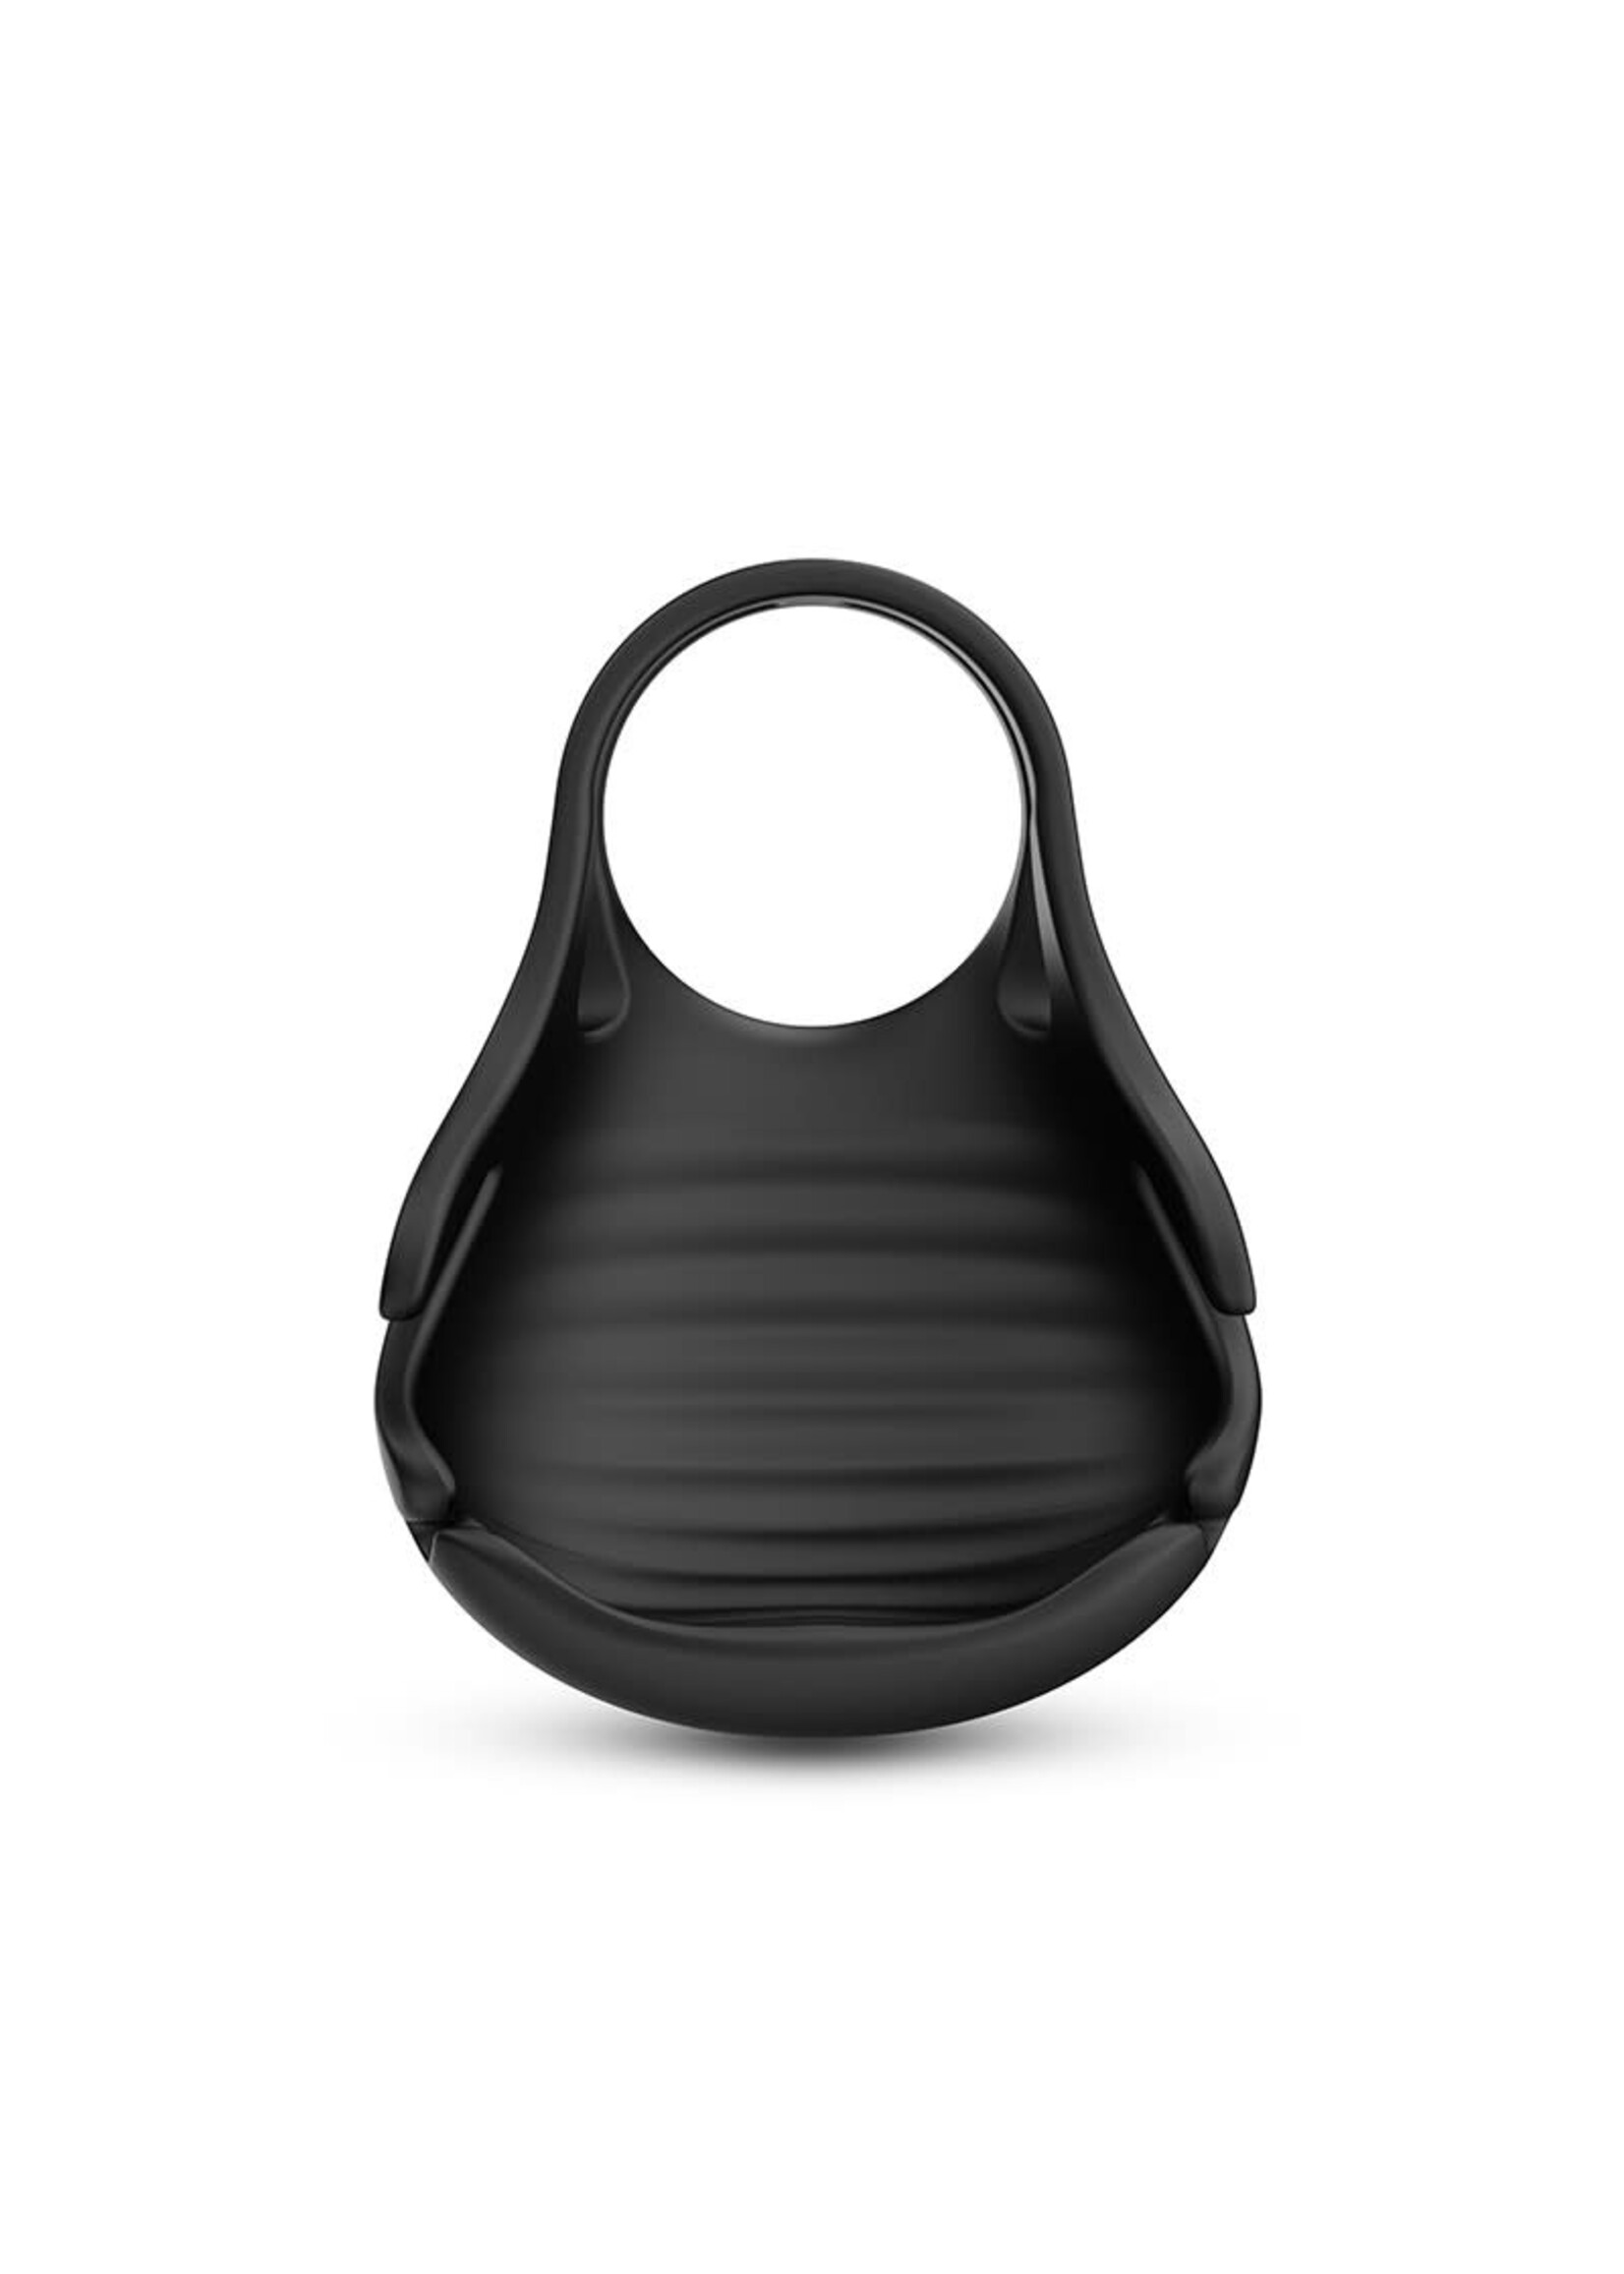 Dorcel Fun bag - vibrating cock ring and testicle stimulator